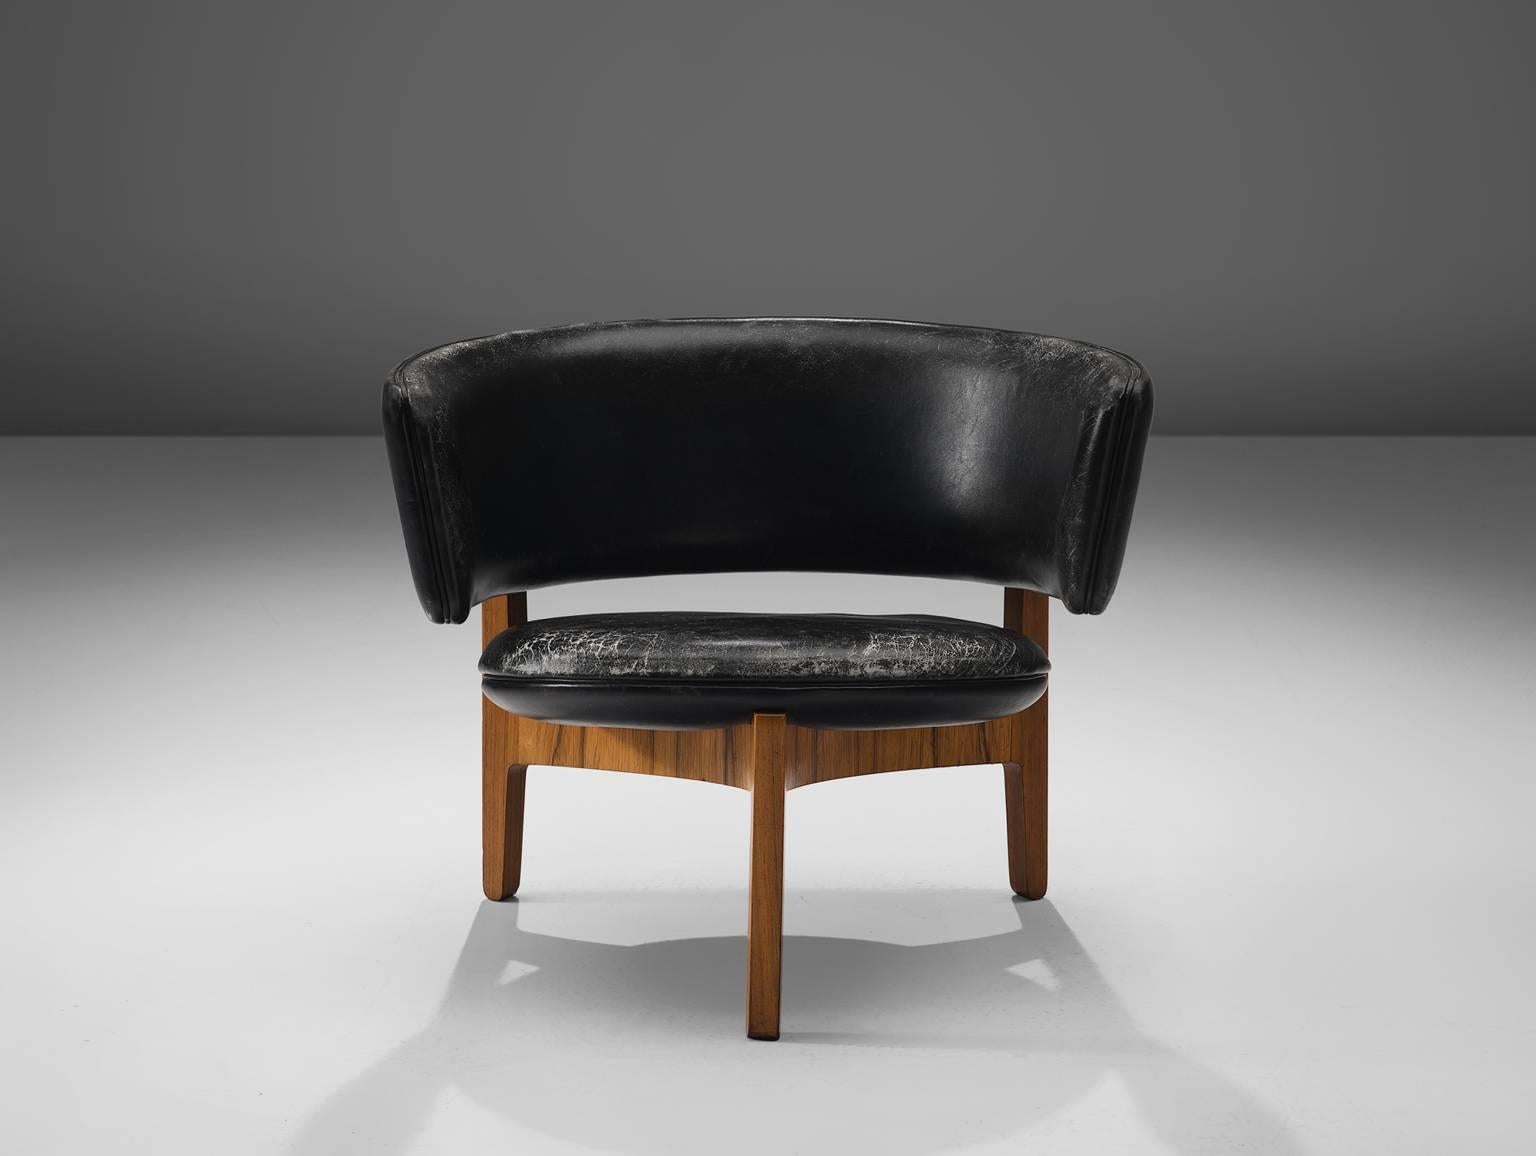 Scandinavian Modern Sven Ellekaer Lounge Chair in Rosewood and Original Black Leather